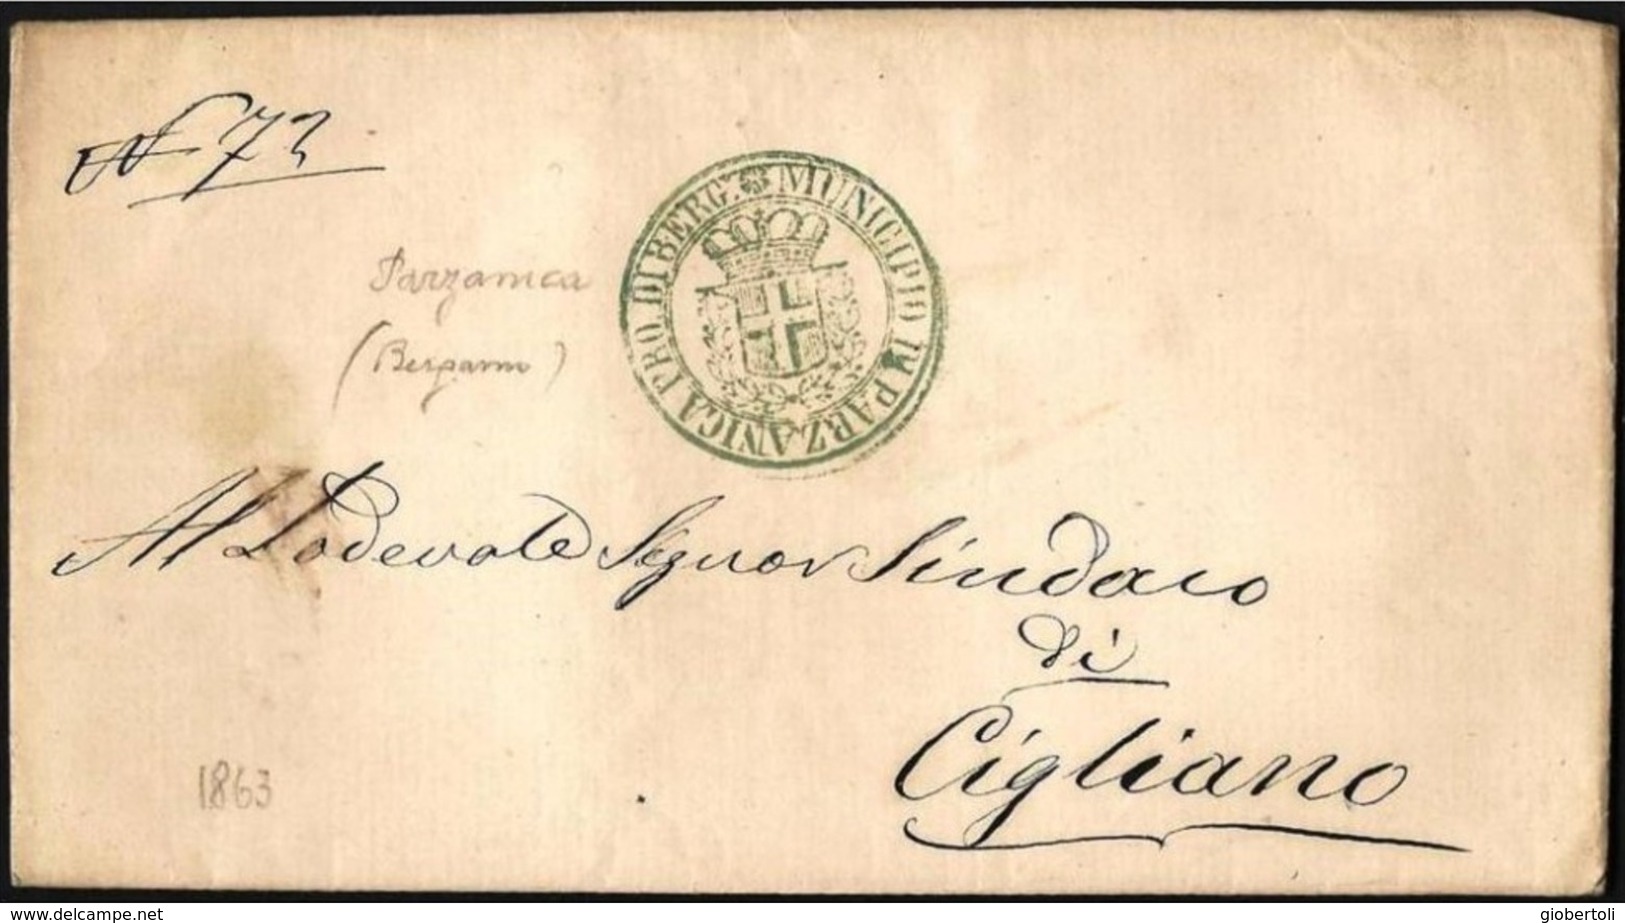 Italia/Italy/Italie: 1863 - Franchigia Postale, Free Post, Postal Franchise, Stemma, Coat Of Arms, Blason - Buste